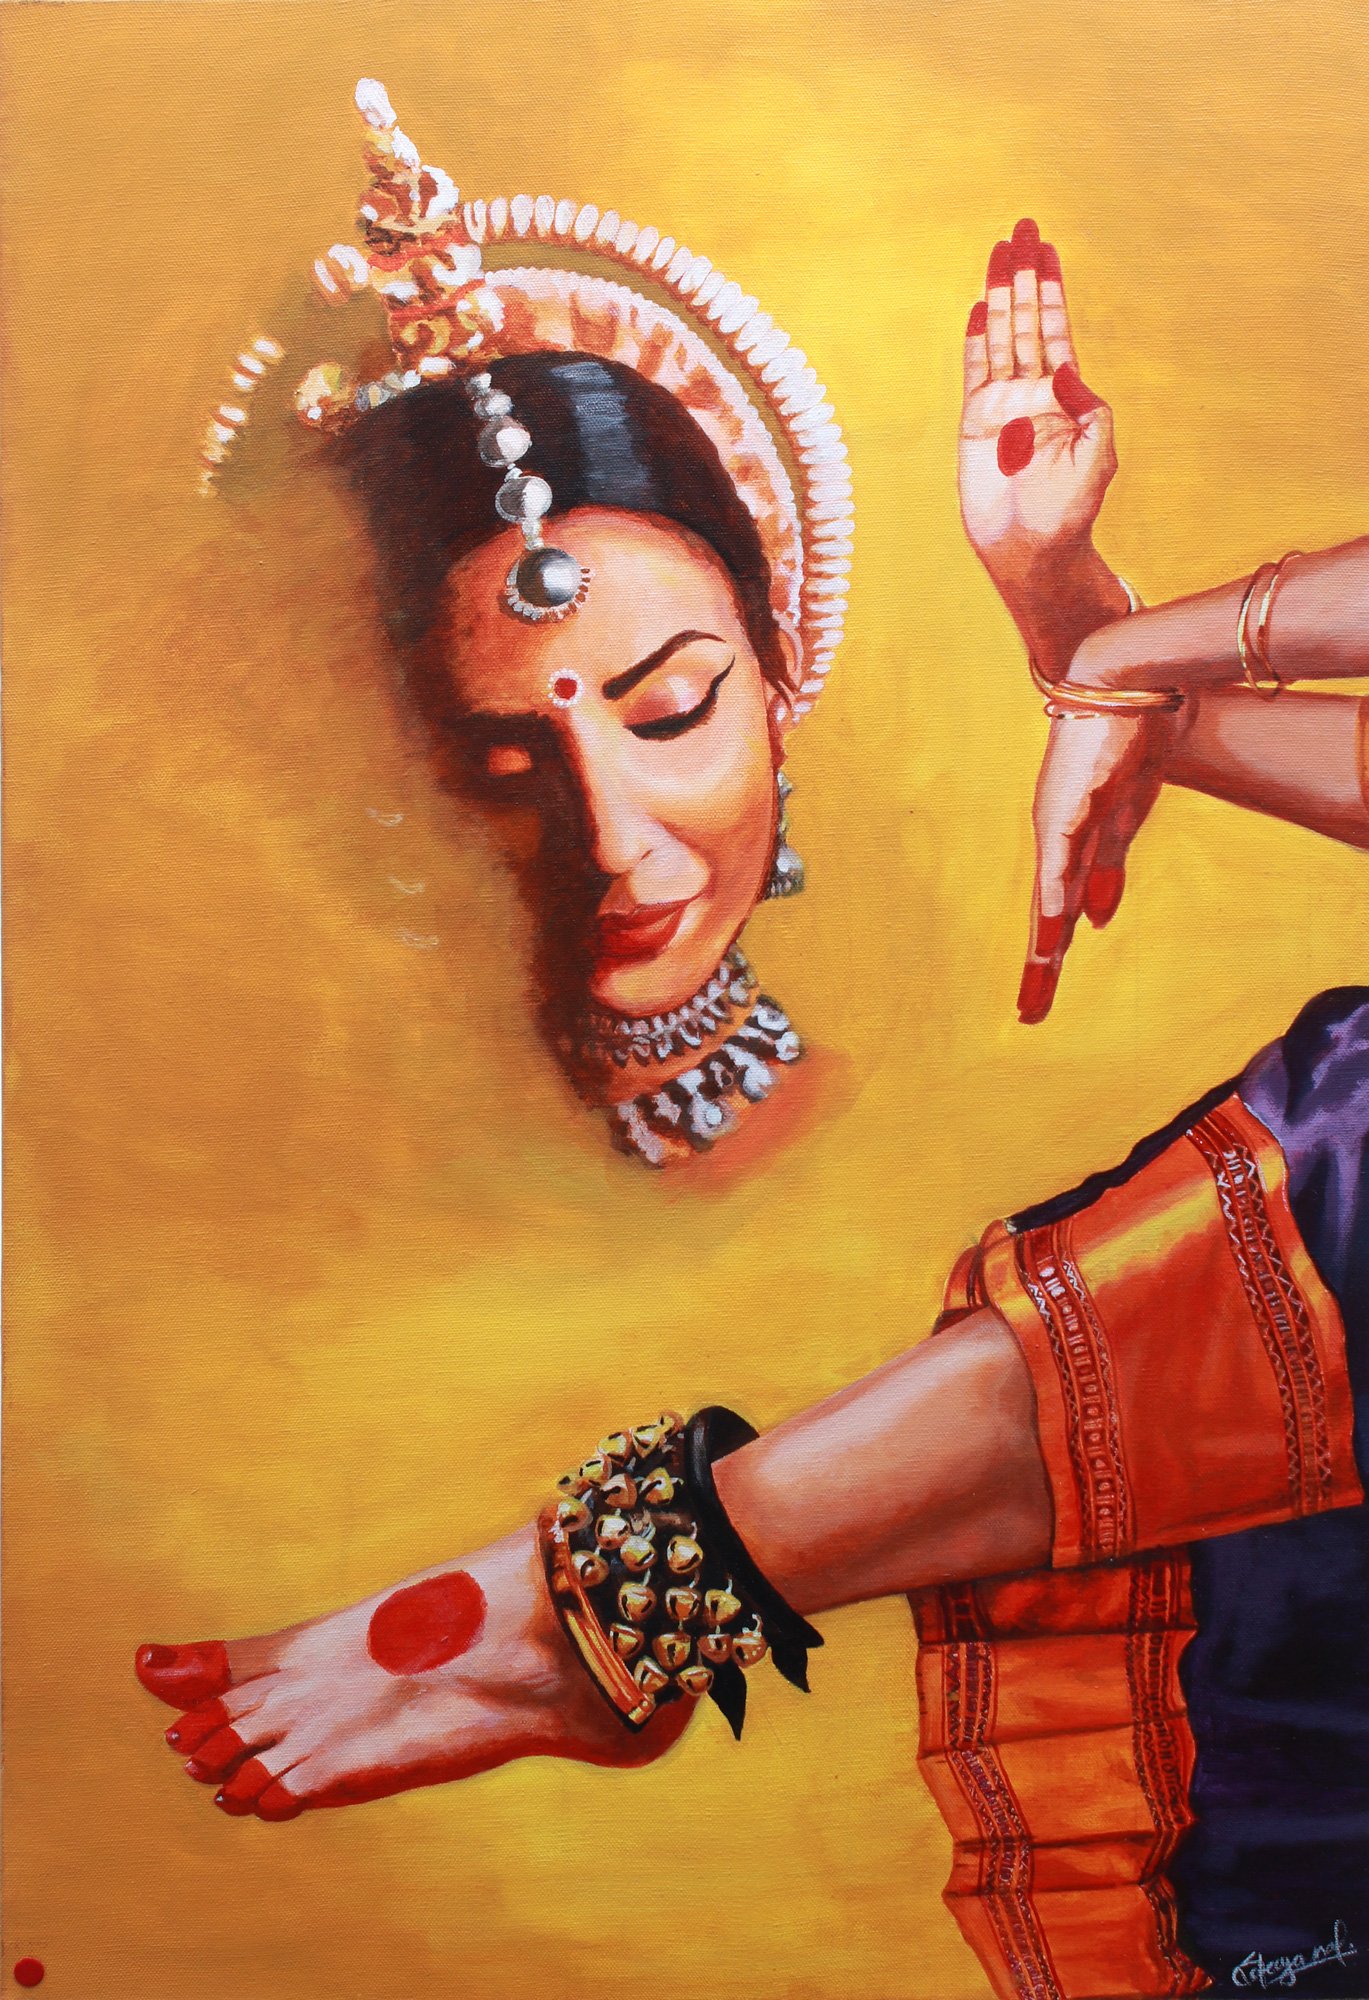 Bharatanatyam - Indian classical dance